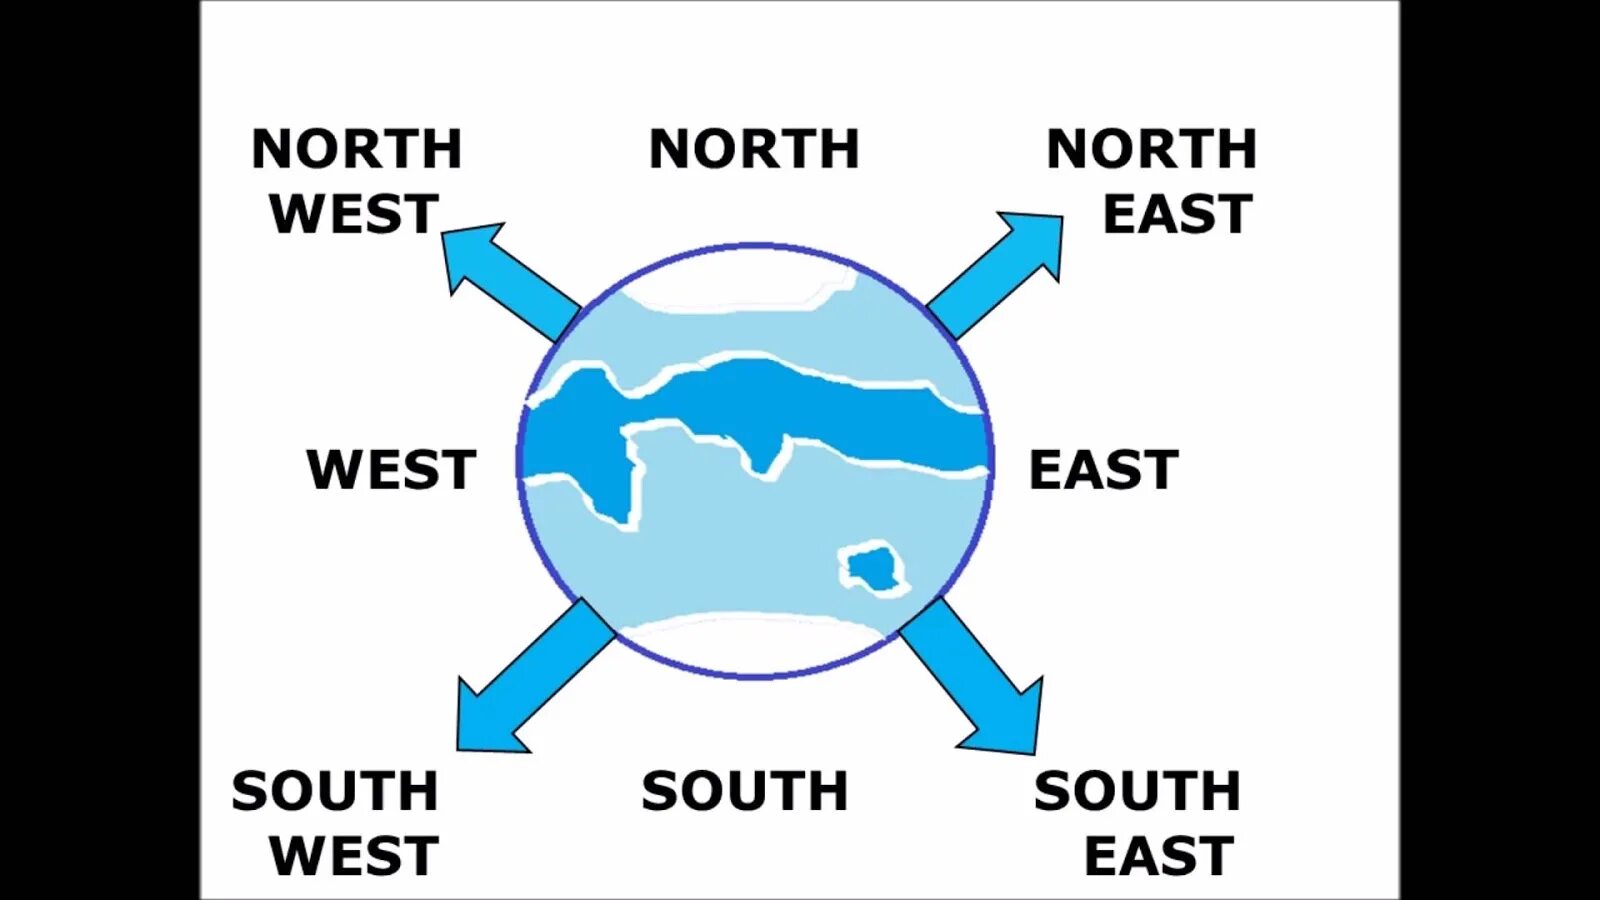 South East West. North South East West. South-West East South North-East North South-East West. Запад восток на английском языке